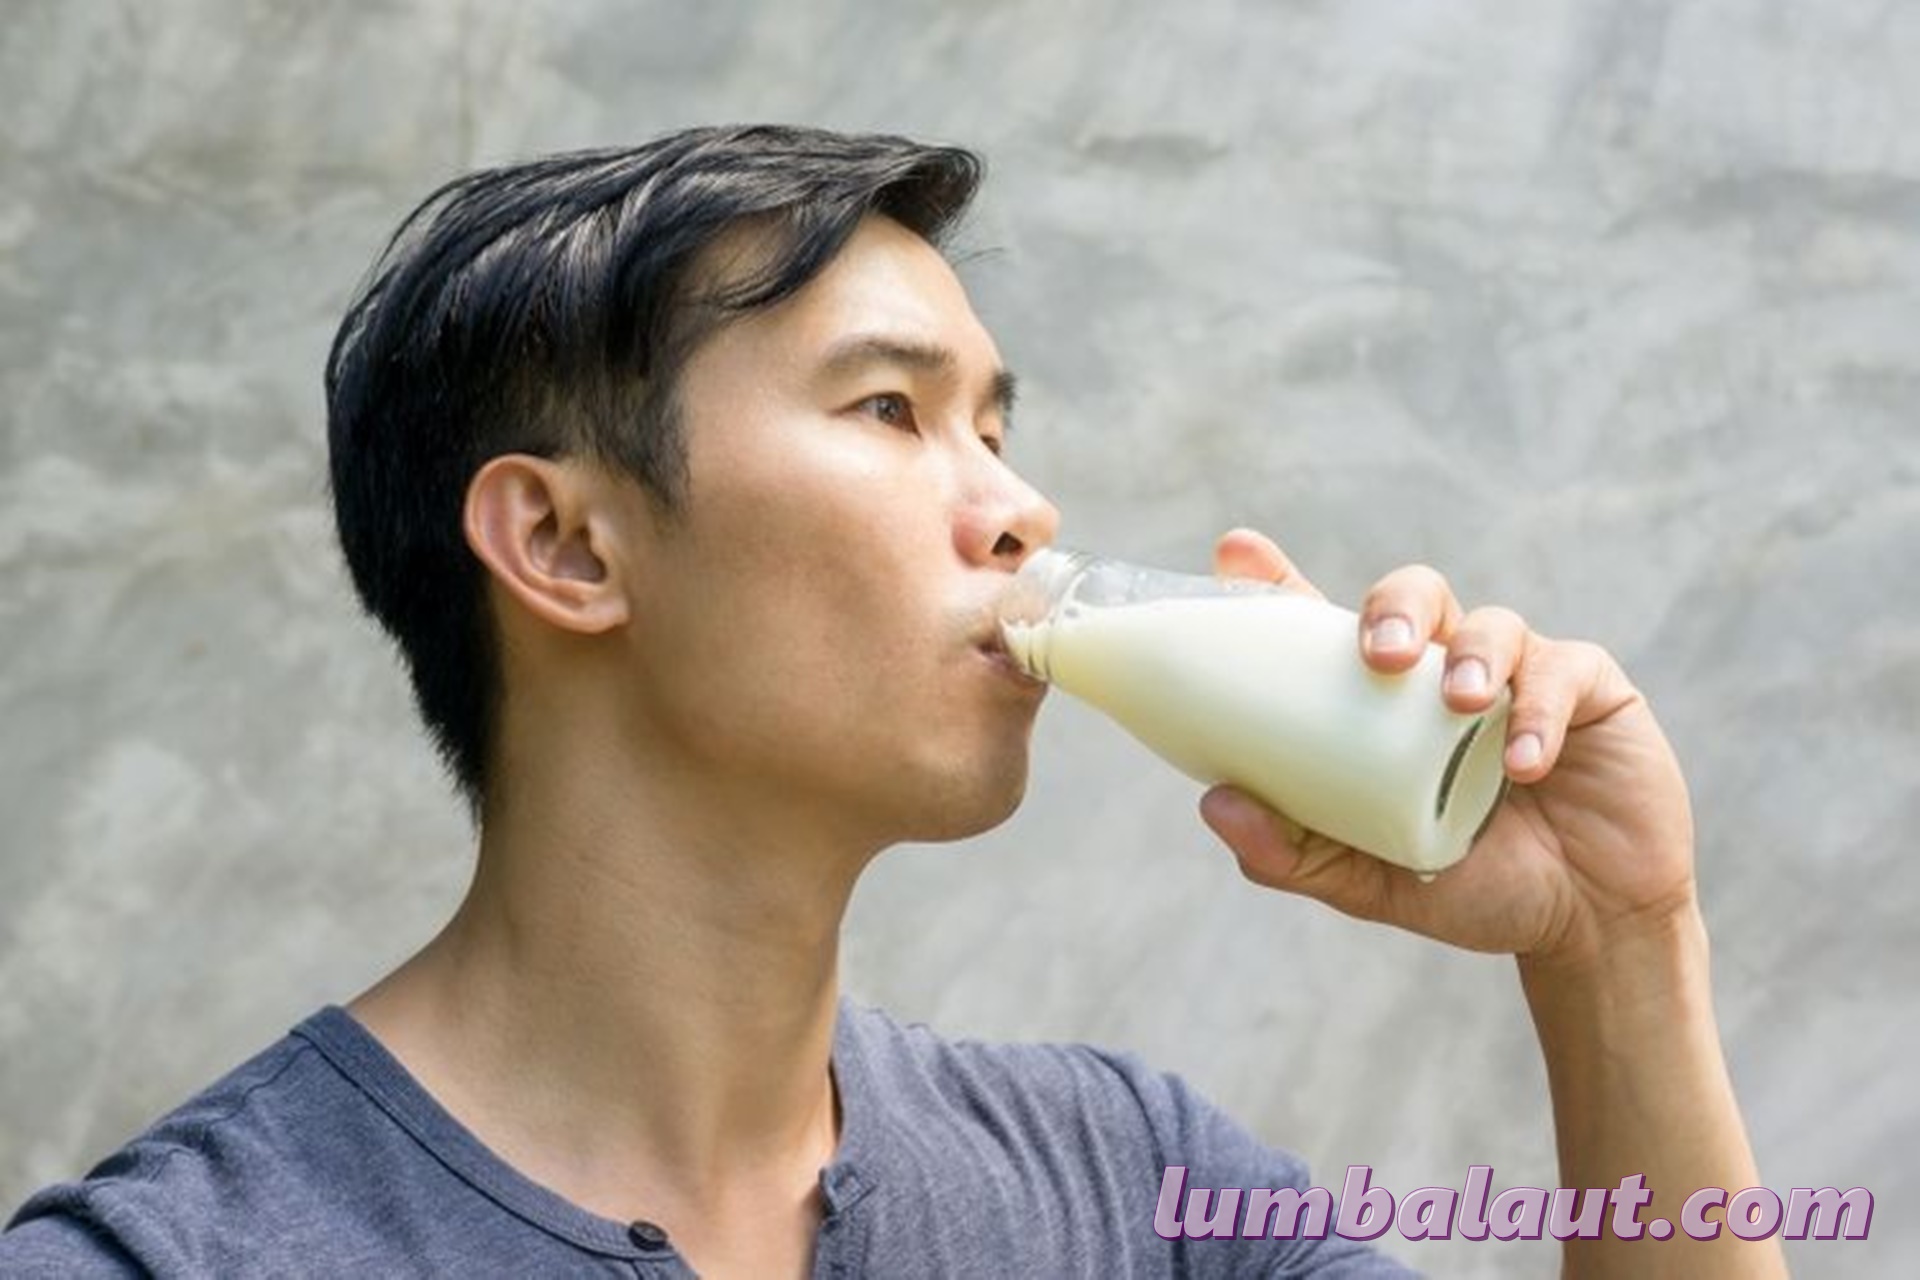 Manfaat Kesehatan Minum Susu